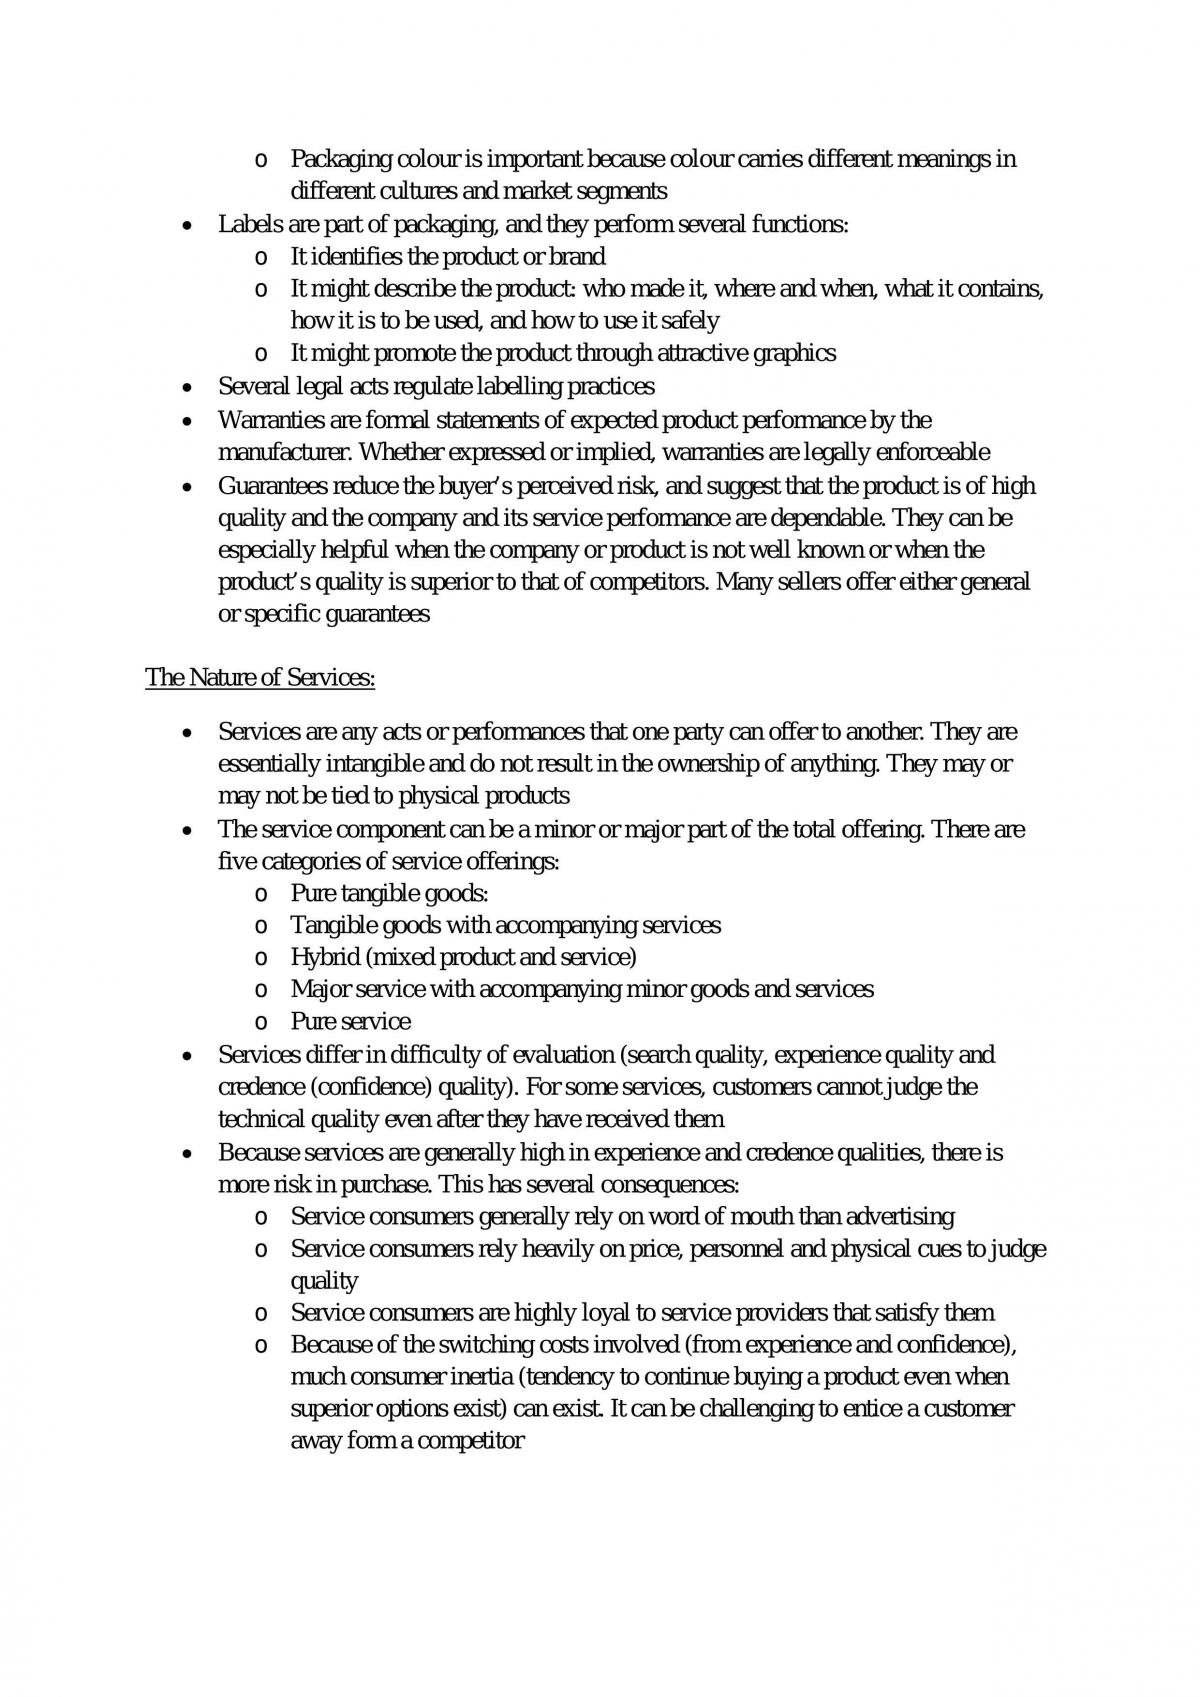 MKT202 Marketing Management Notes - Page 34